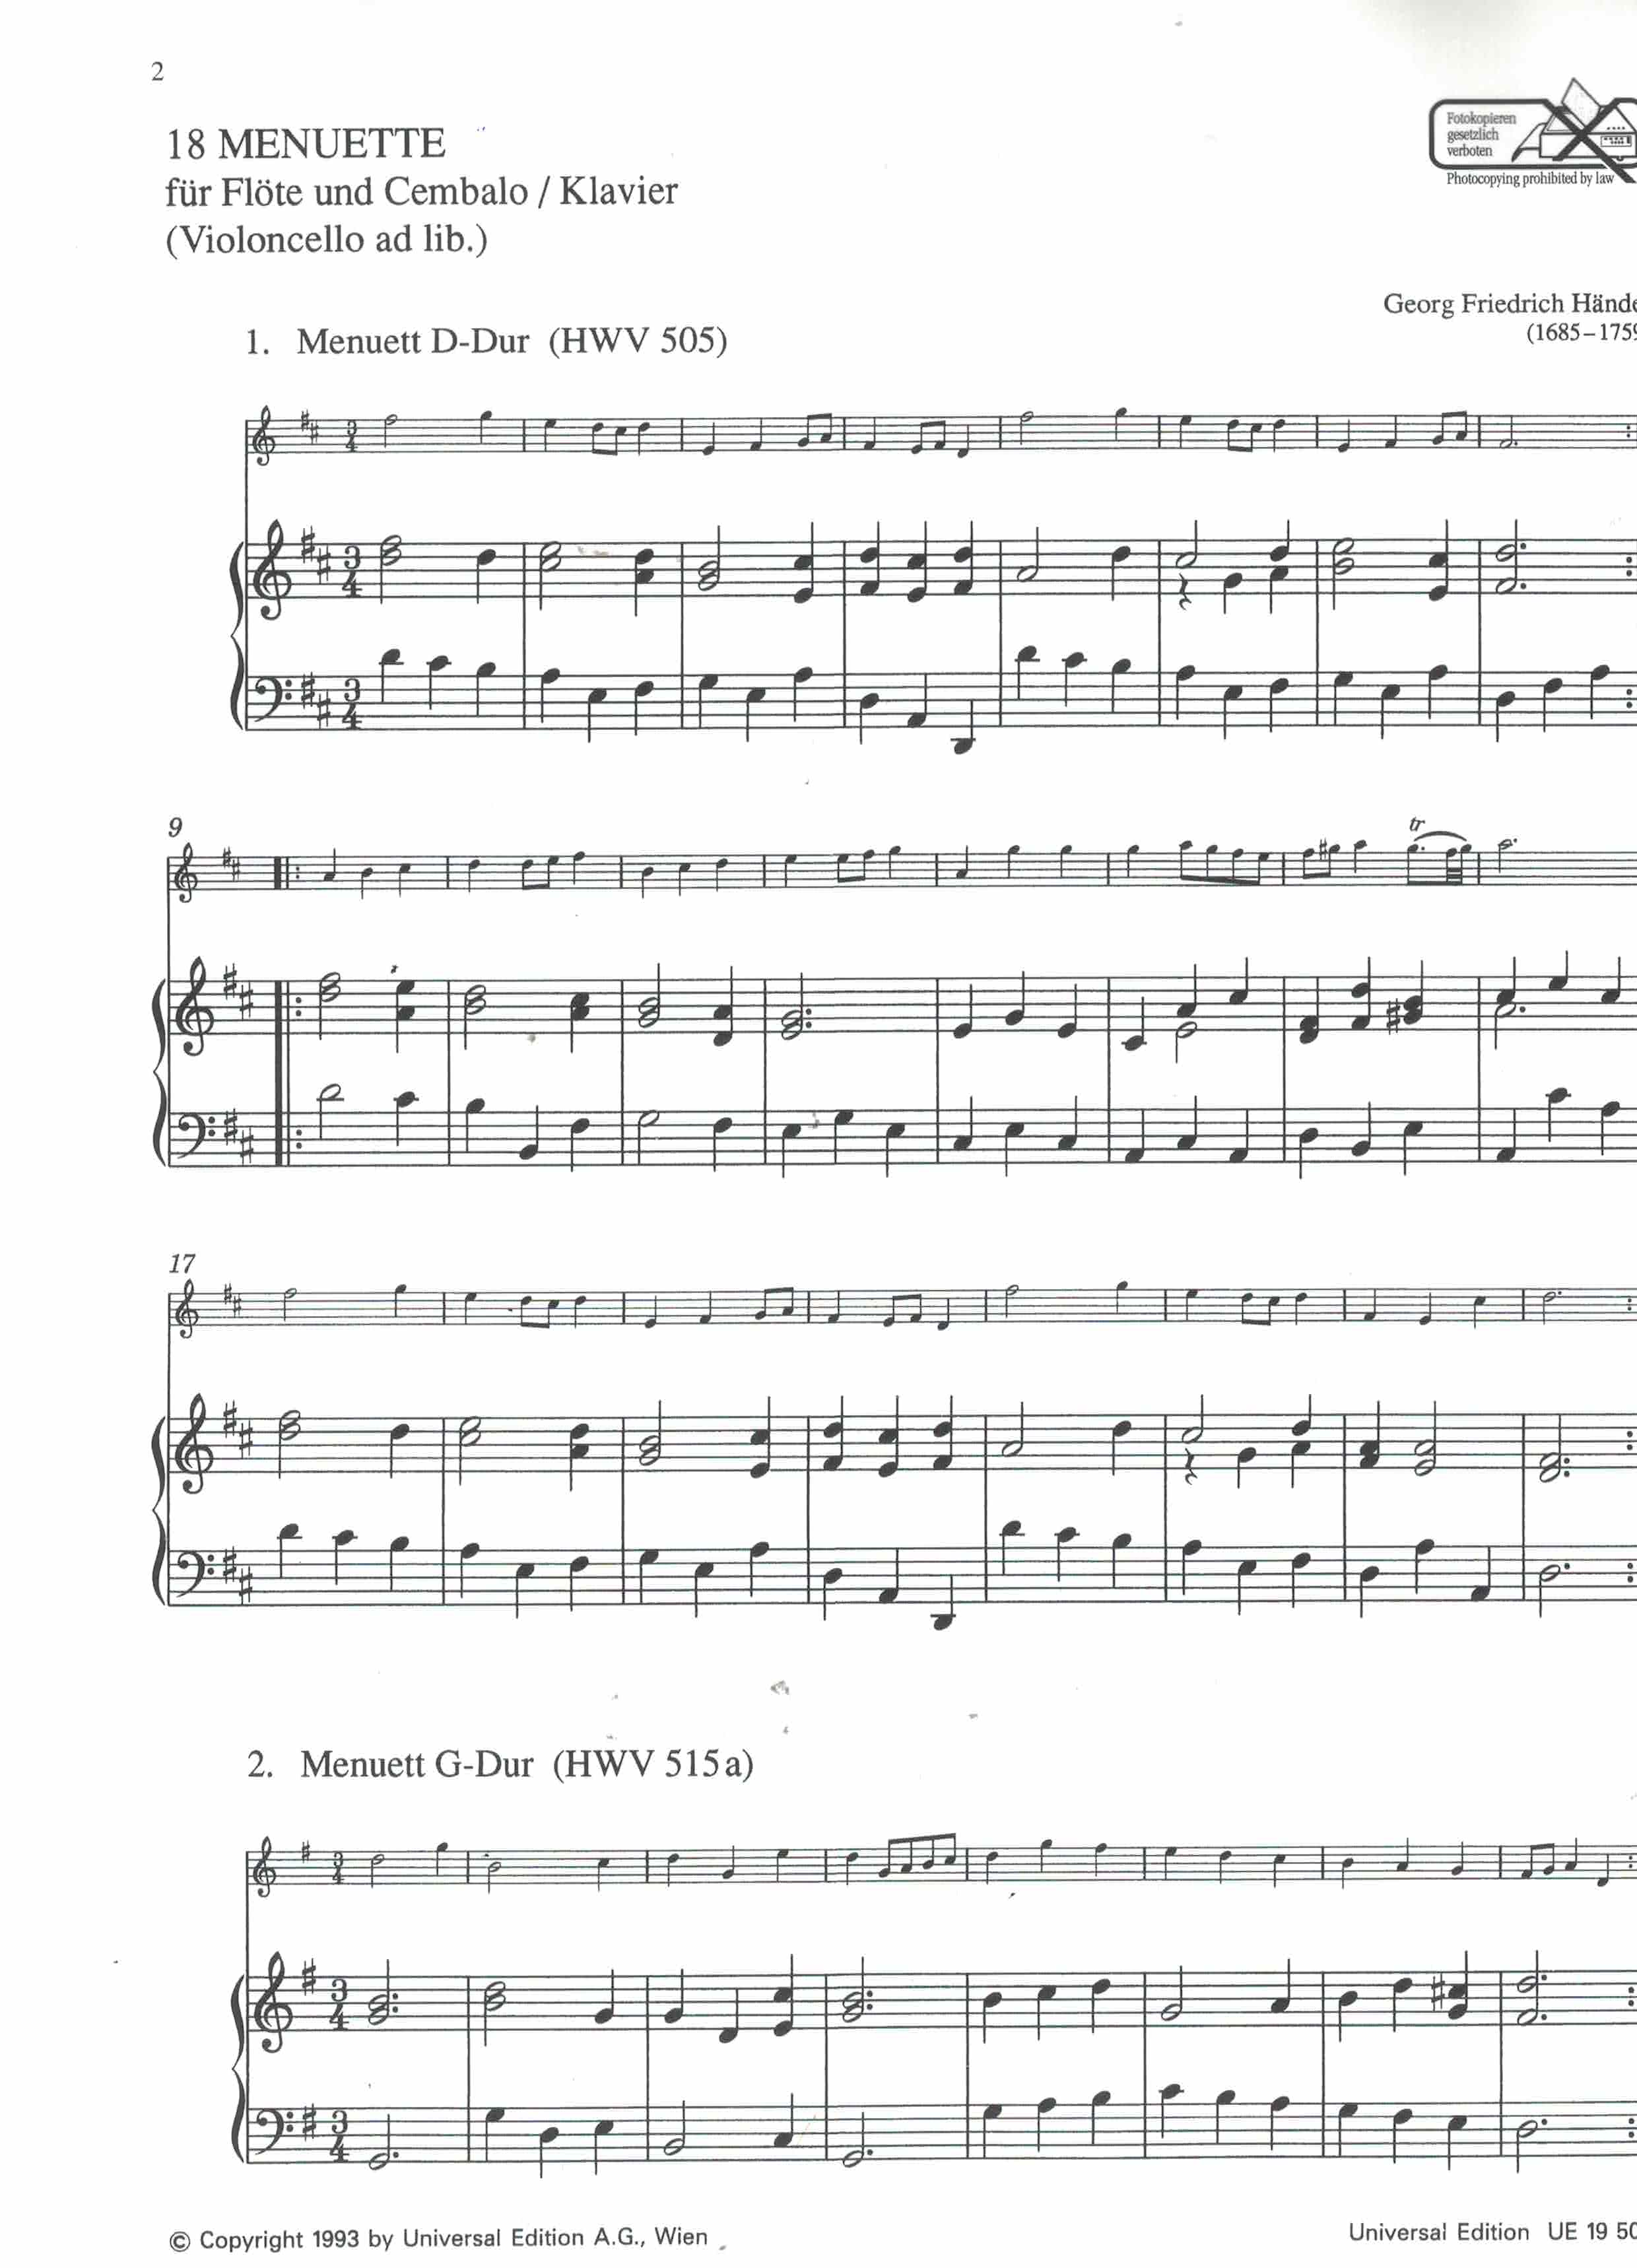 18 Menuette - Händel, Querflöte/Klavier